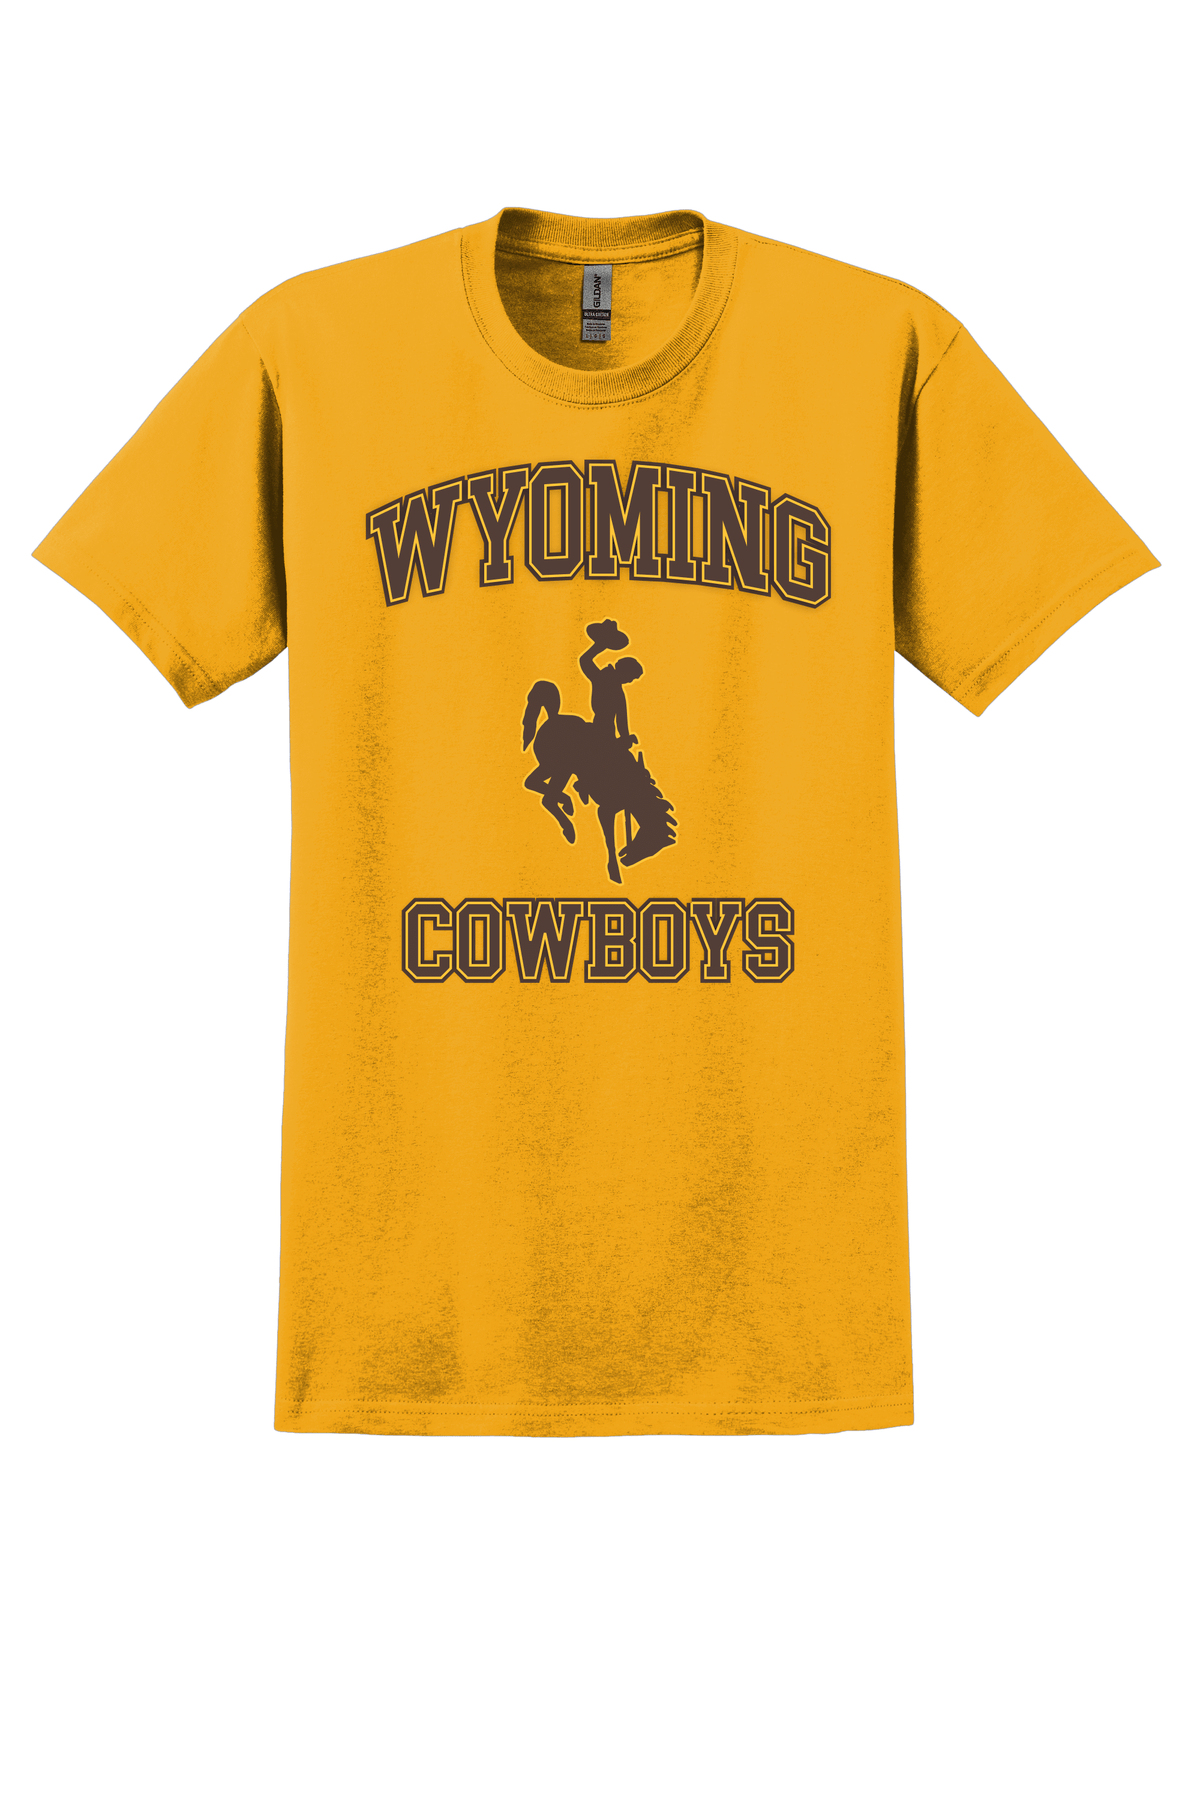 Wyoming Cowboys T-shirt- Gold